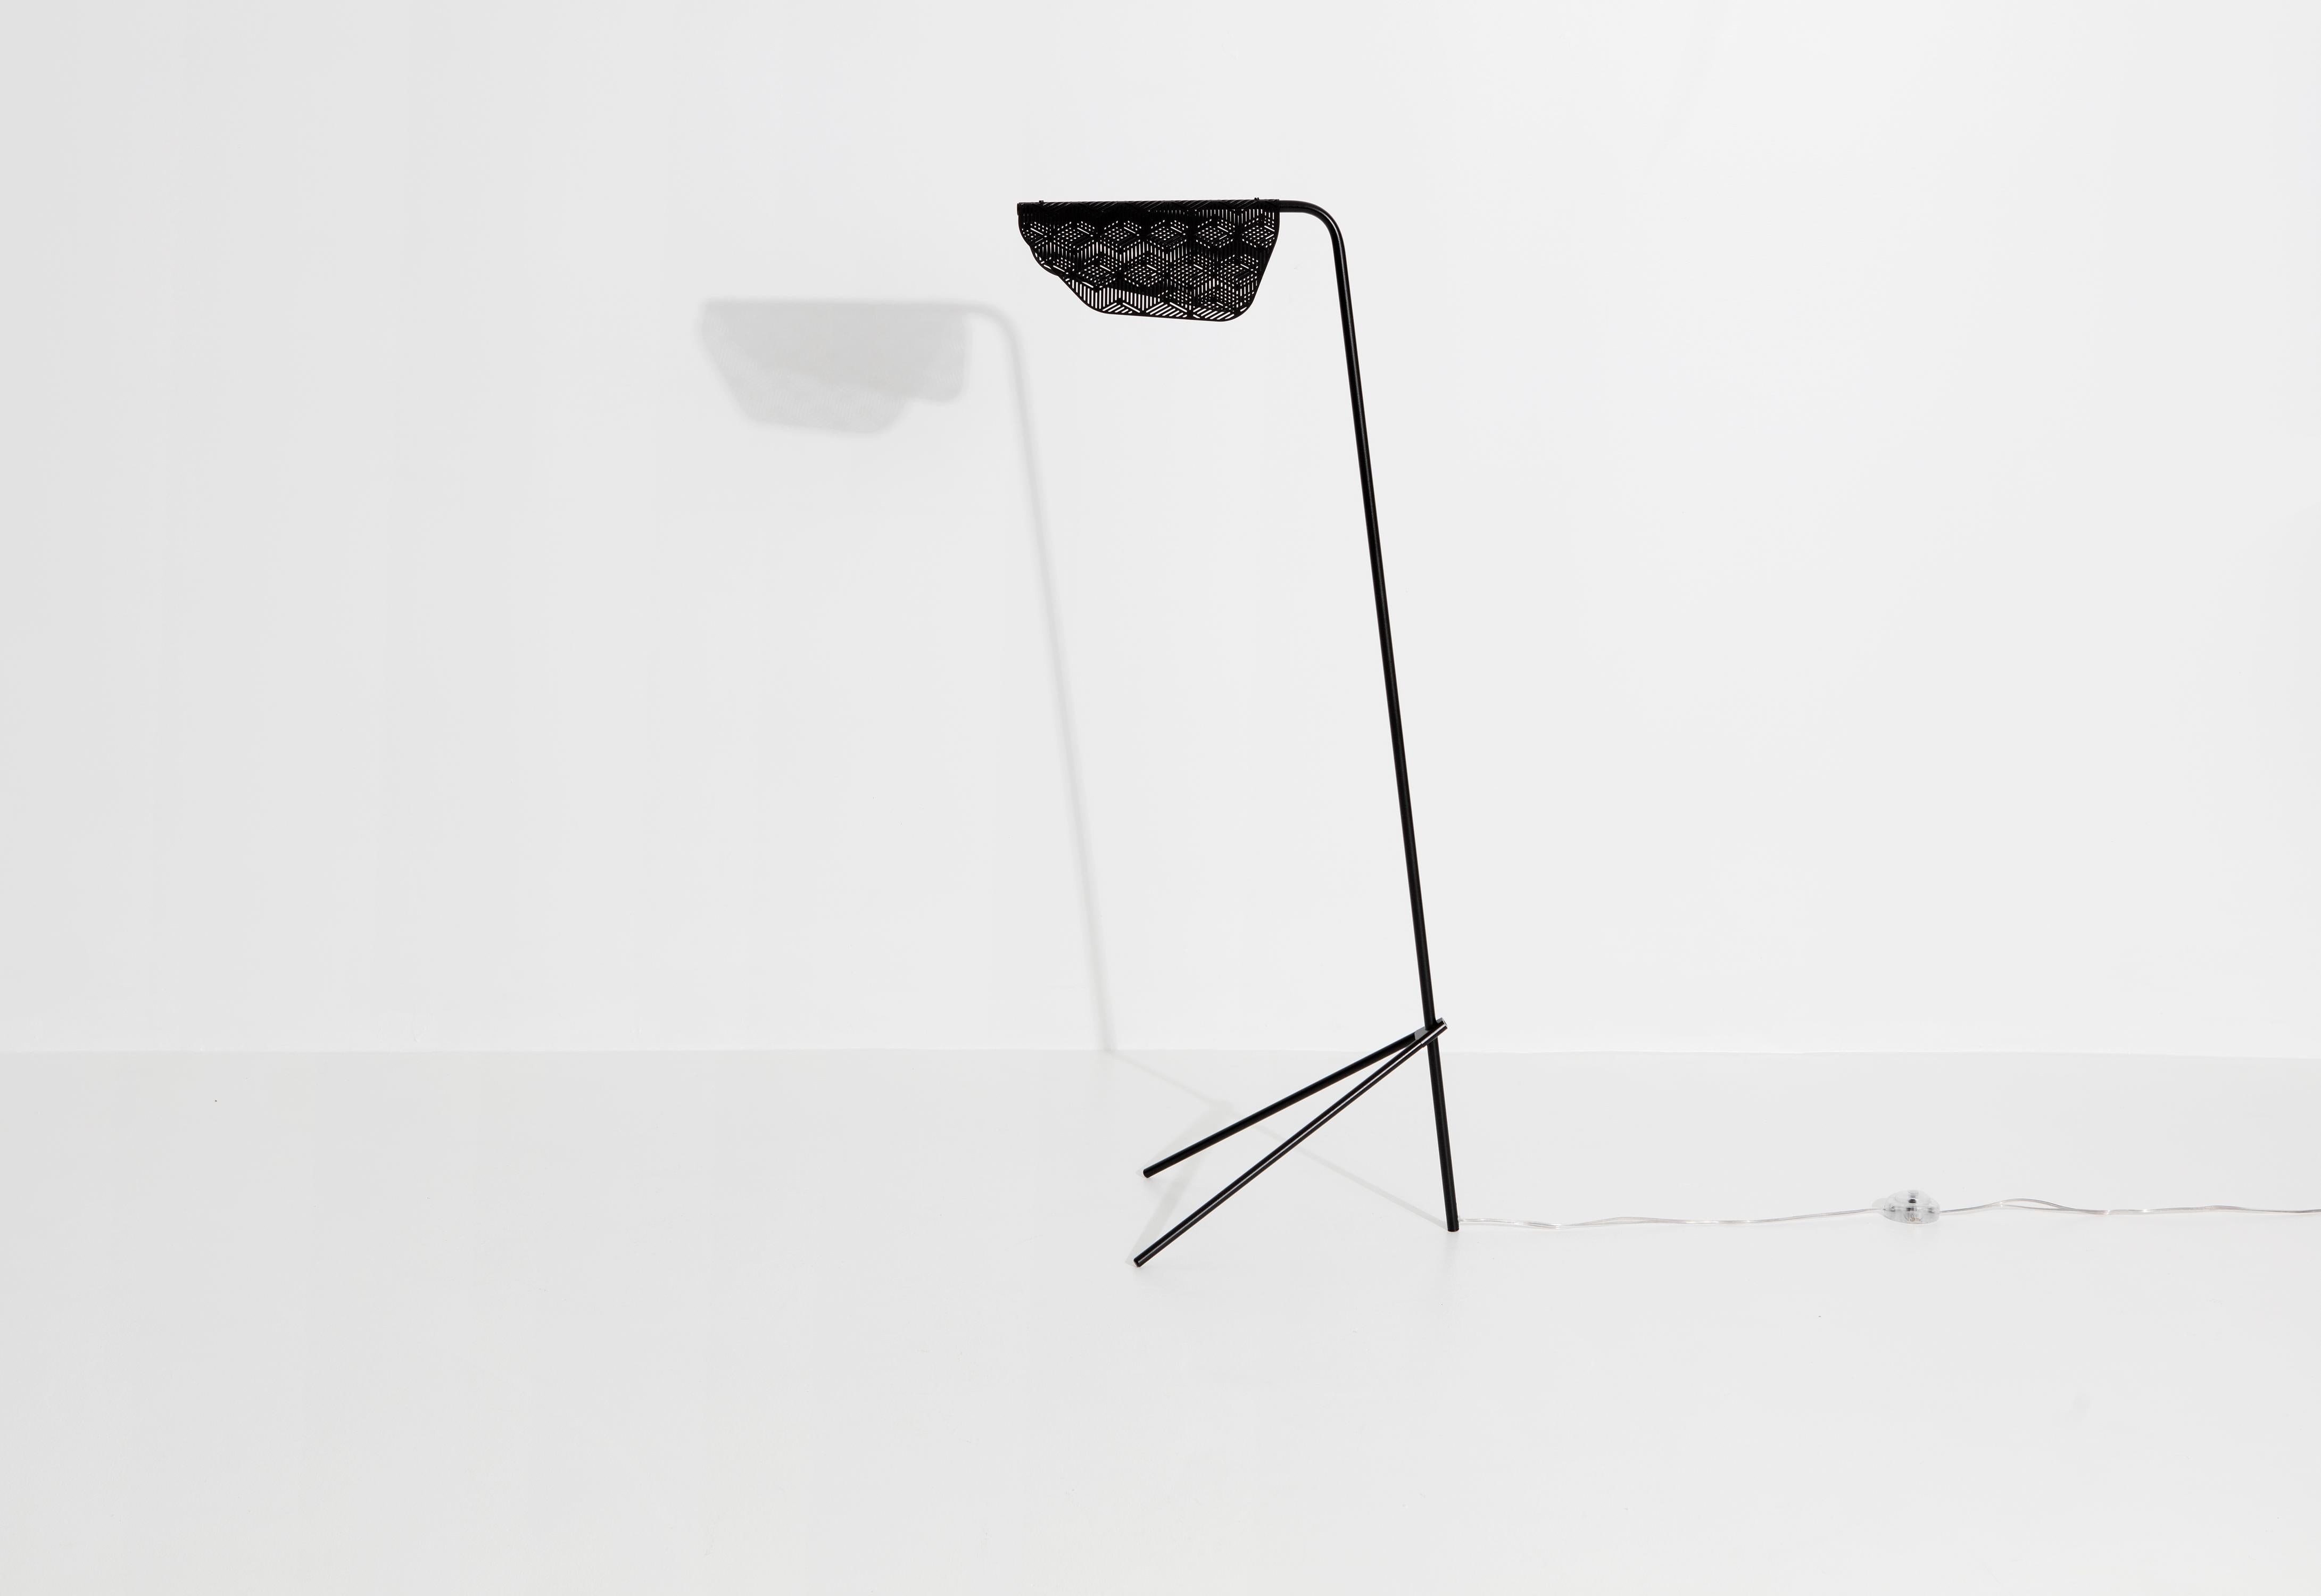 Brass Petite Friture Mediterranea Floor Lamp in Black by Noé Duchaufour-Lawrance, 2016 For Sale